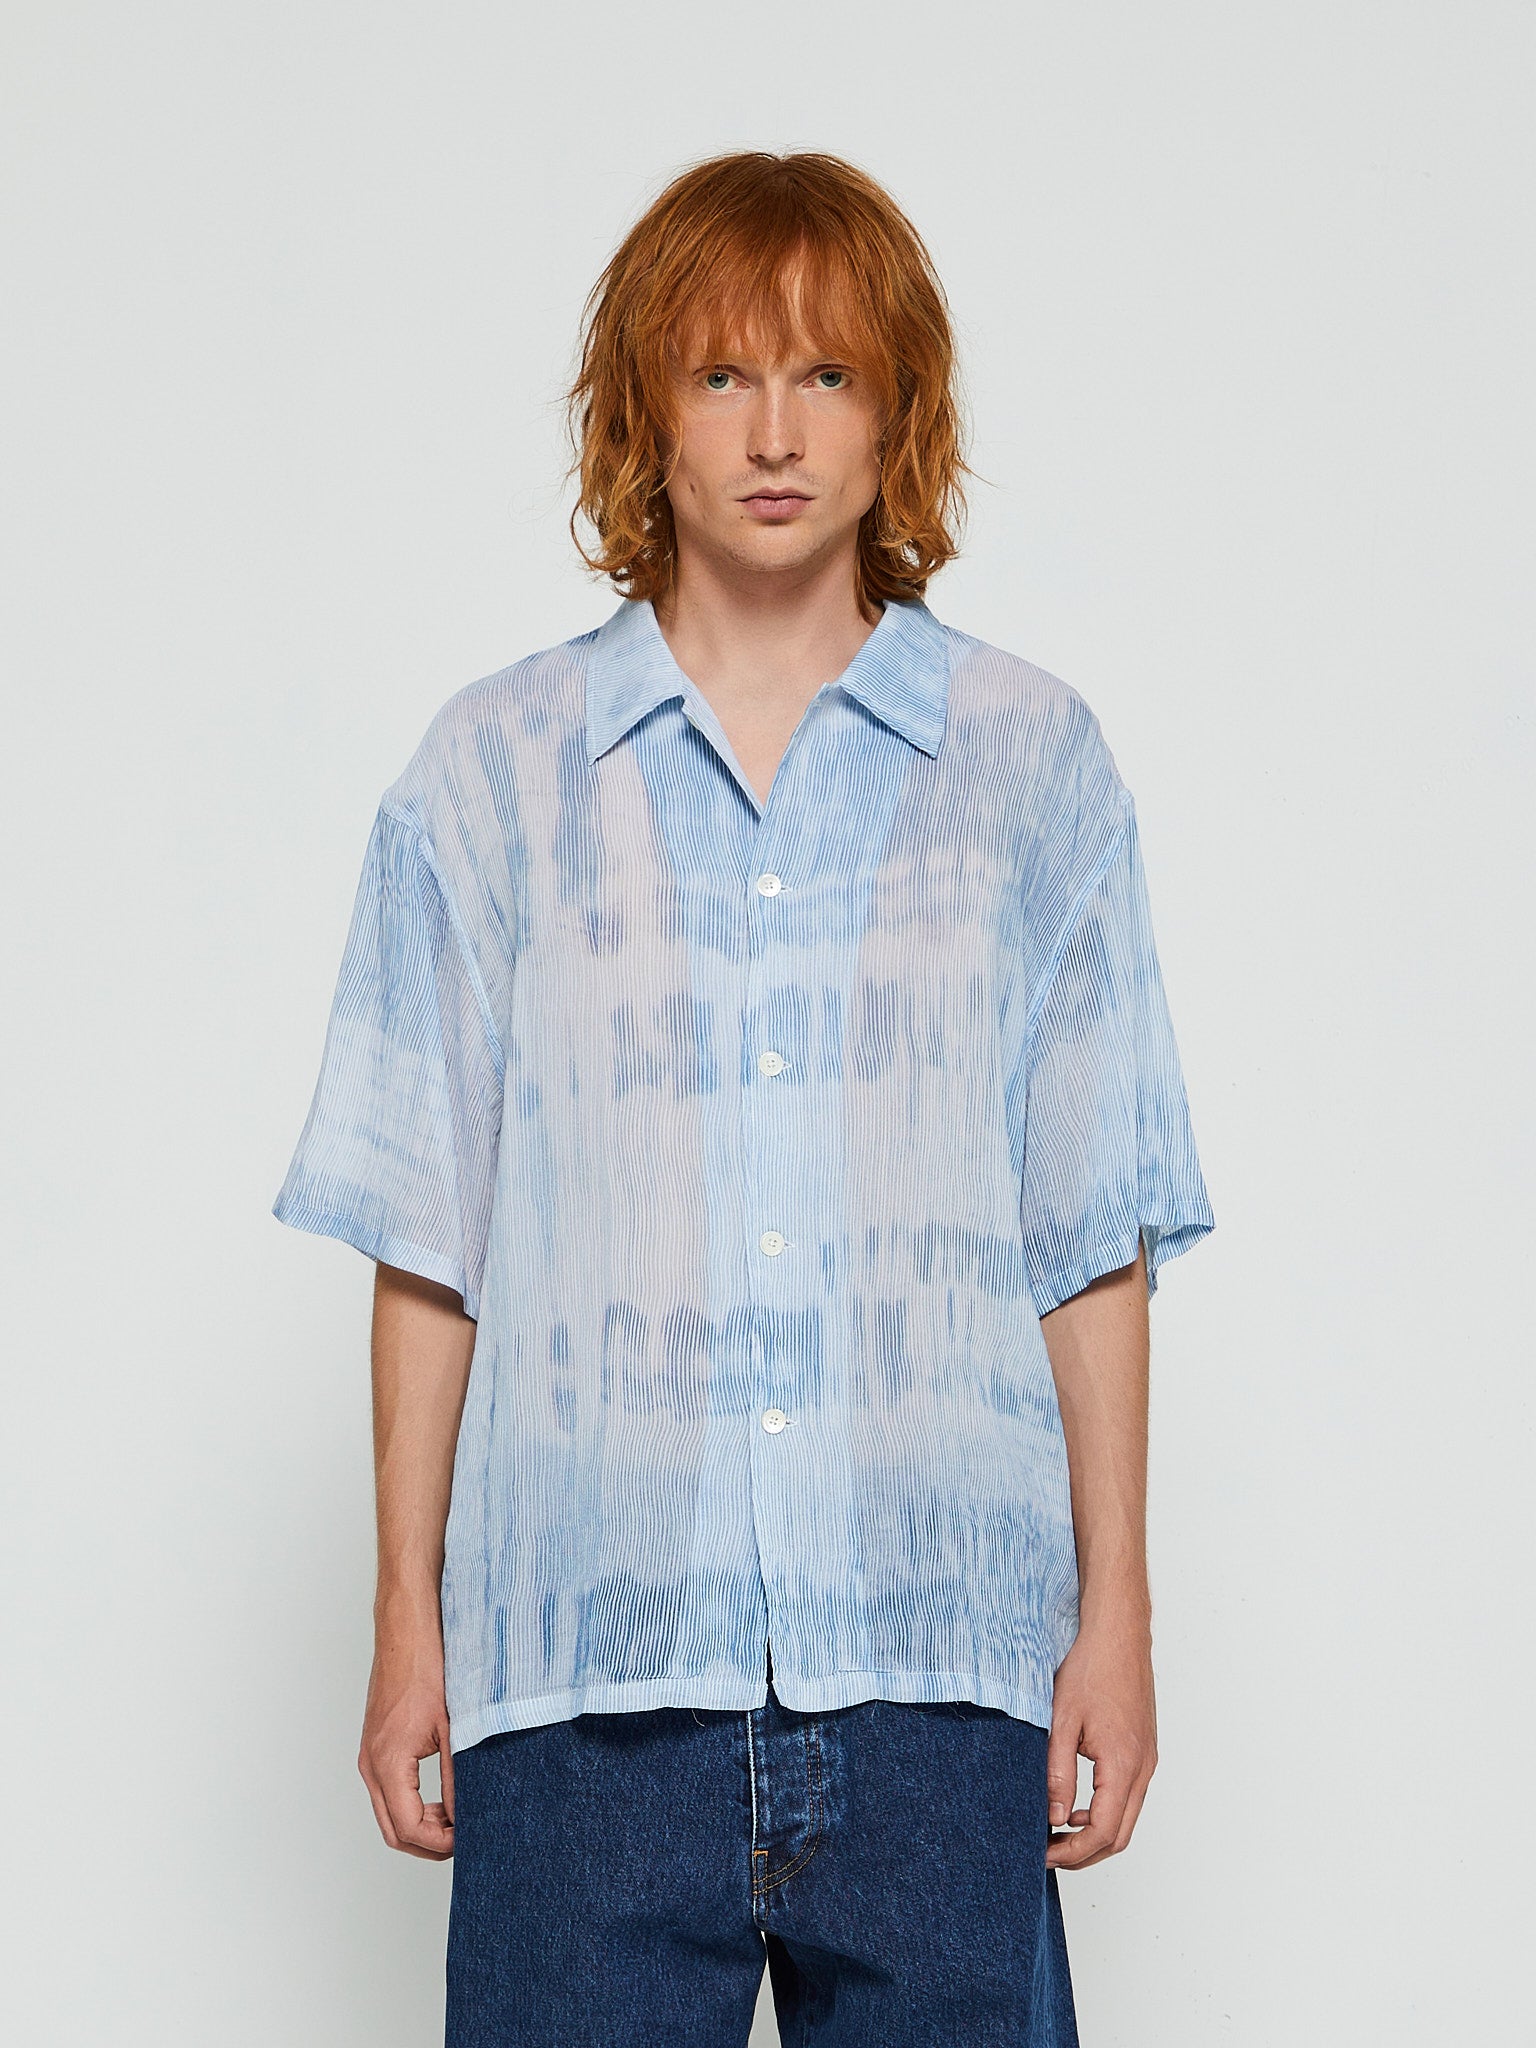 Our Lgeacy - Short Sleeve Box Shirt in Blue Brush Stroke Print